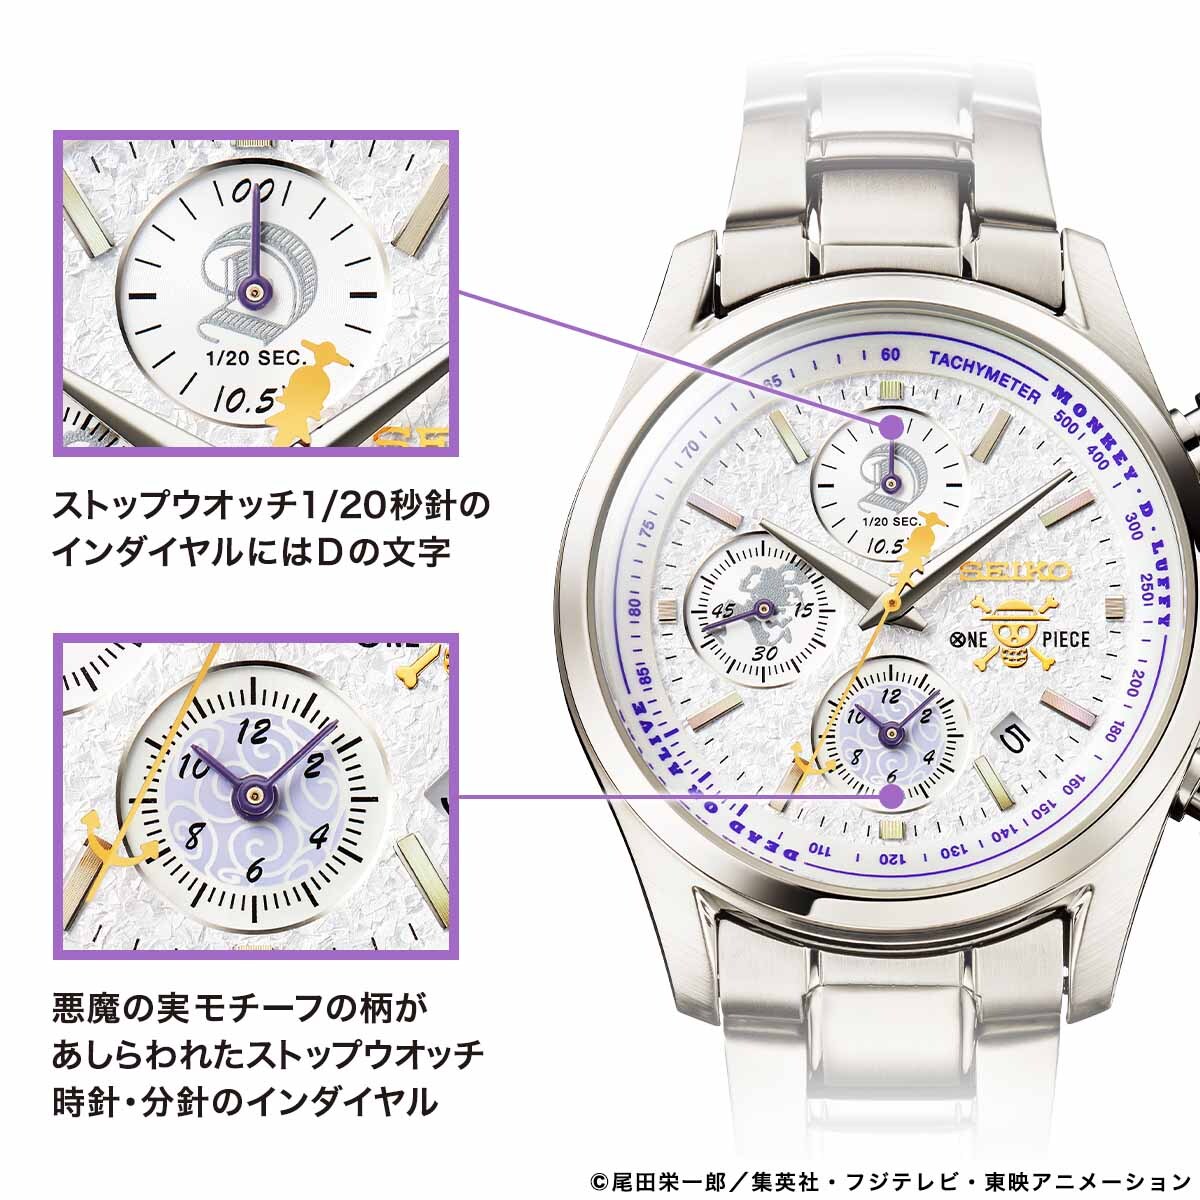 SEIKO ONEPIECE コラボ 腕時計 ニカ - 時計